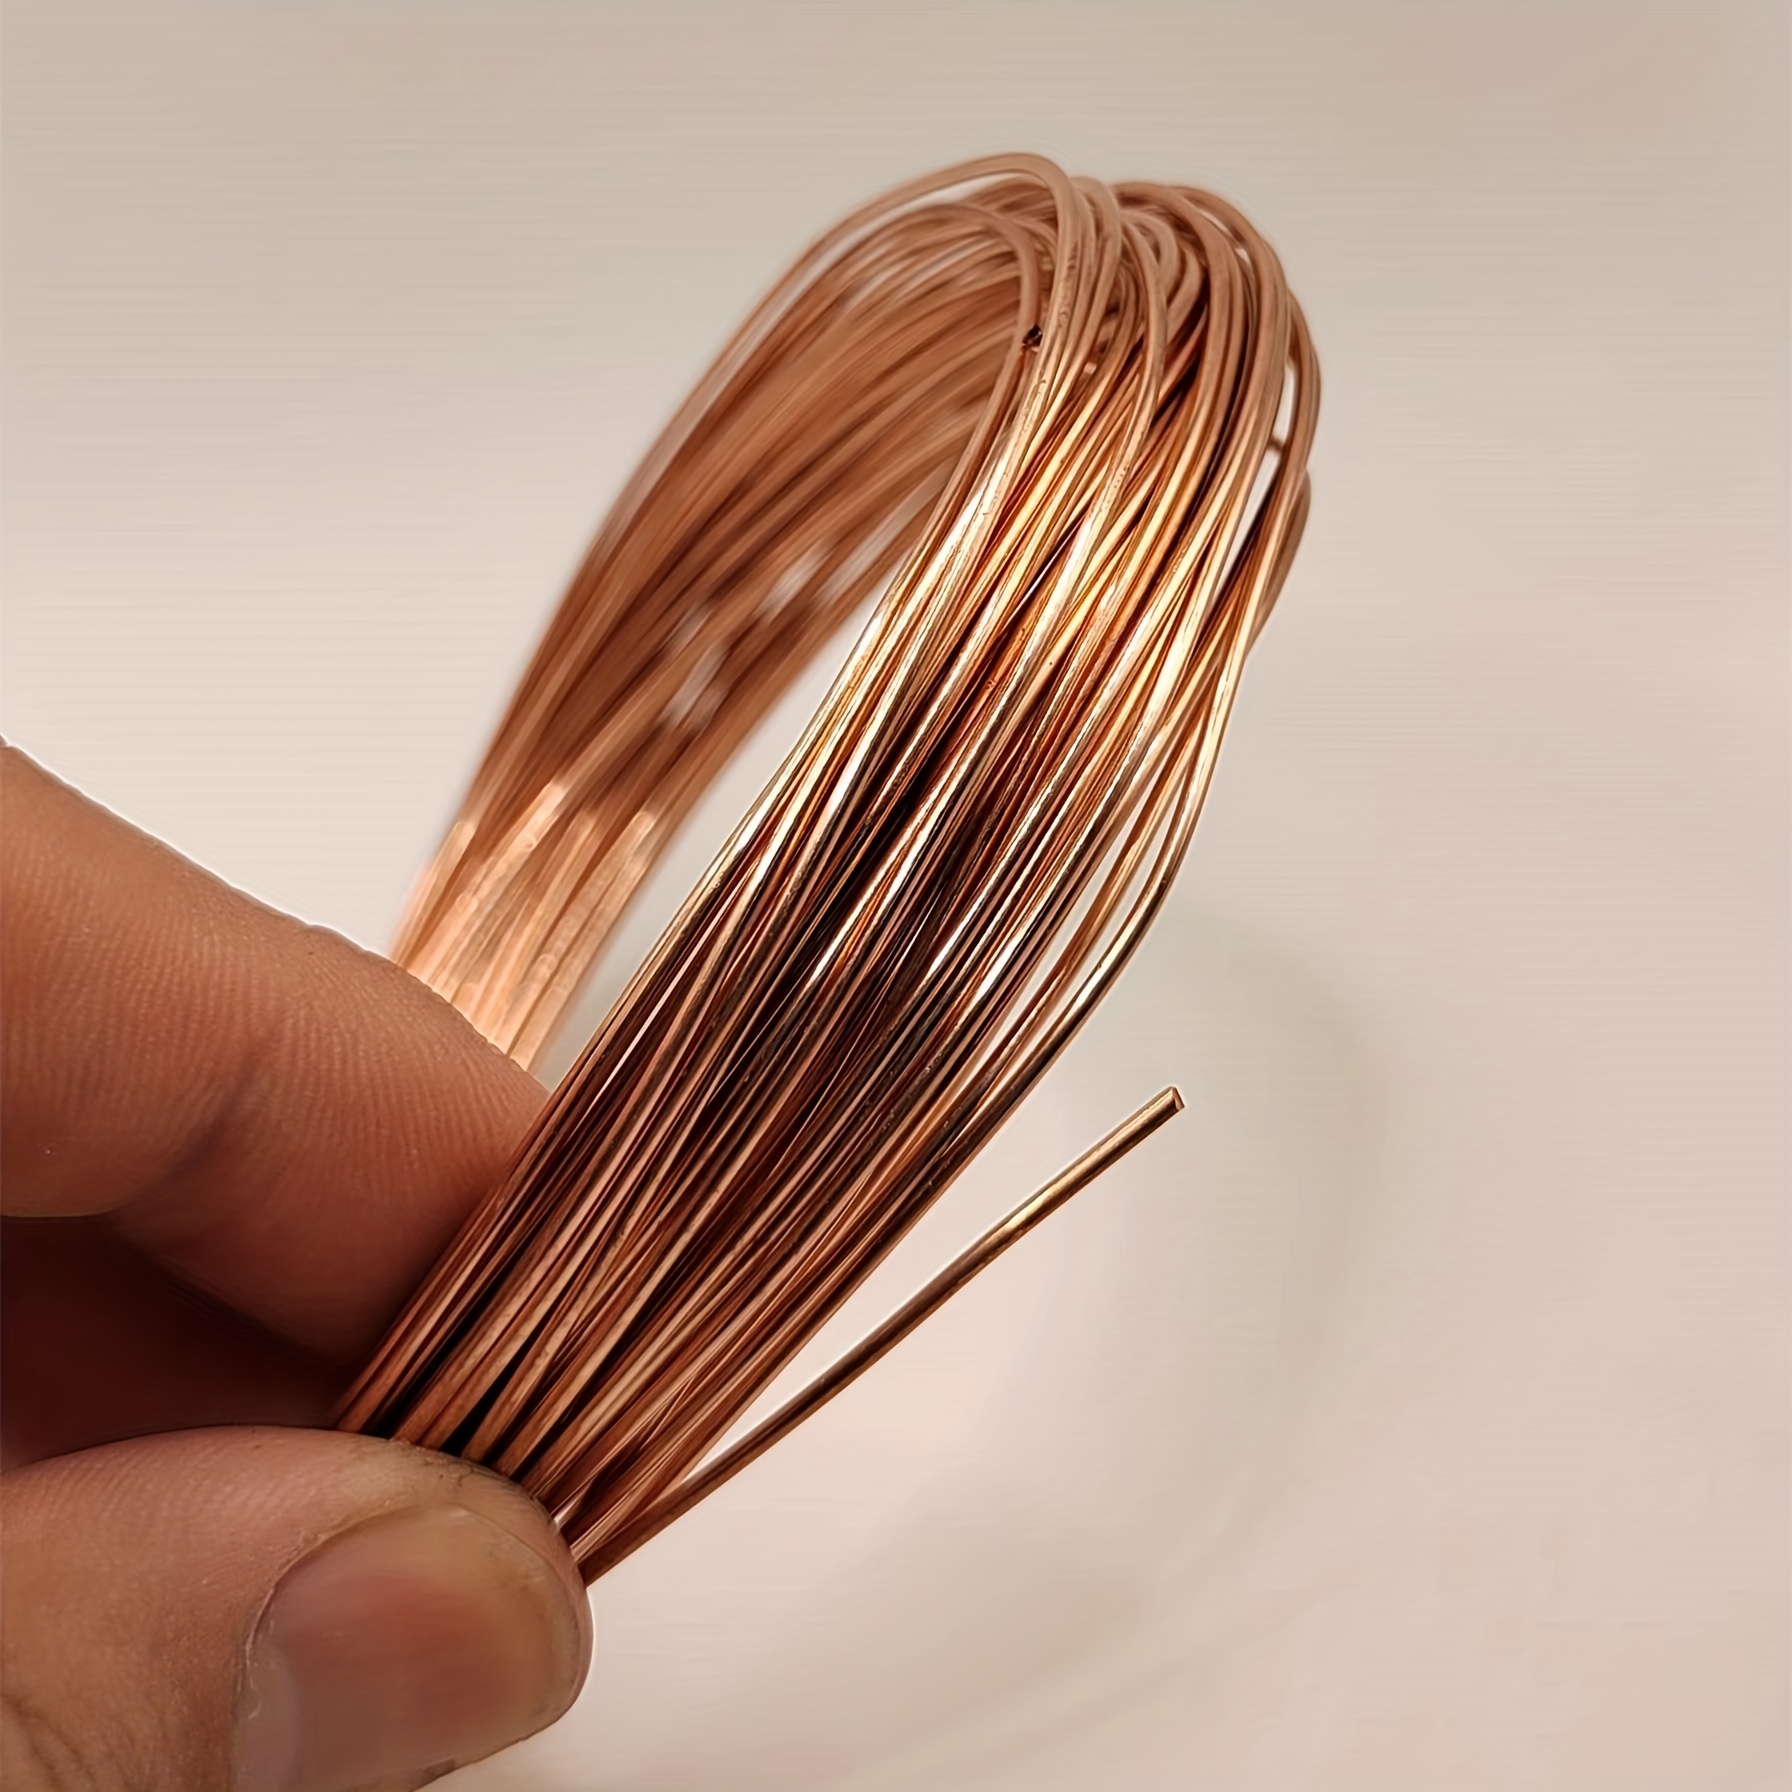 3mm Copper Craft Wire Jewelry, Copper Wire Craft Ideas